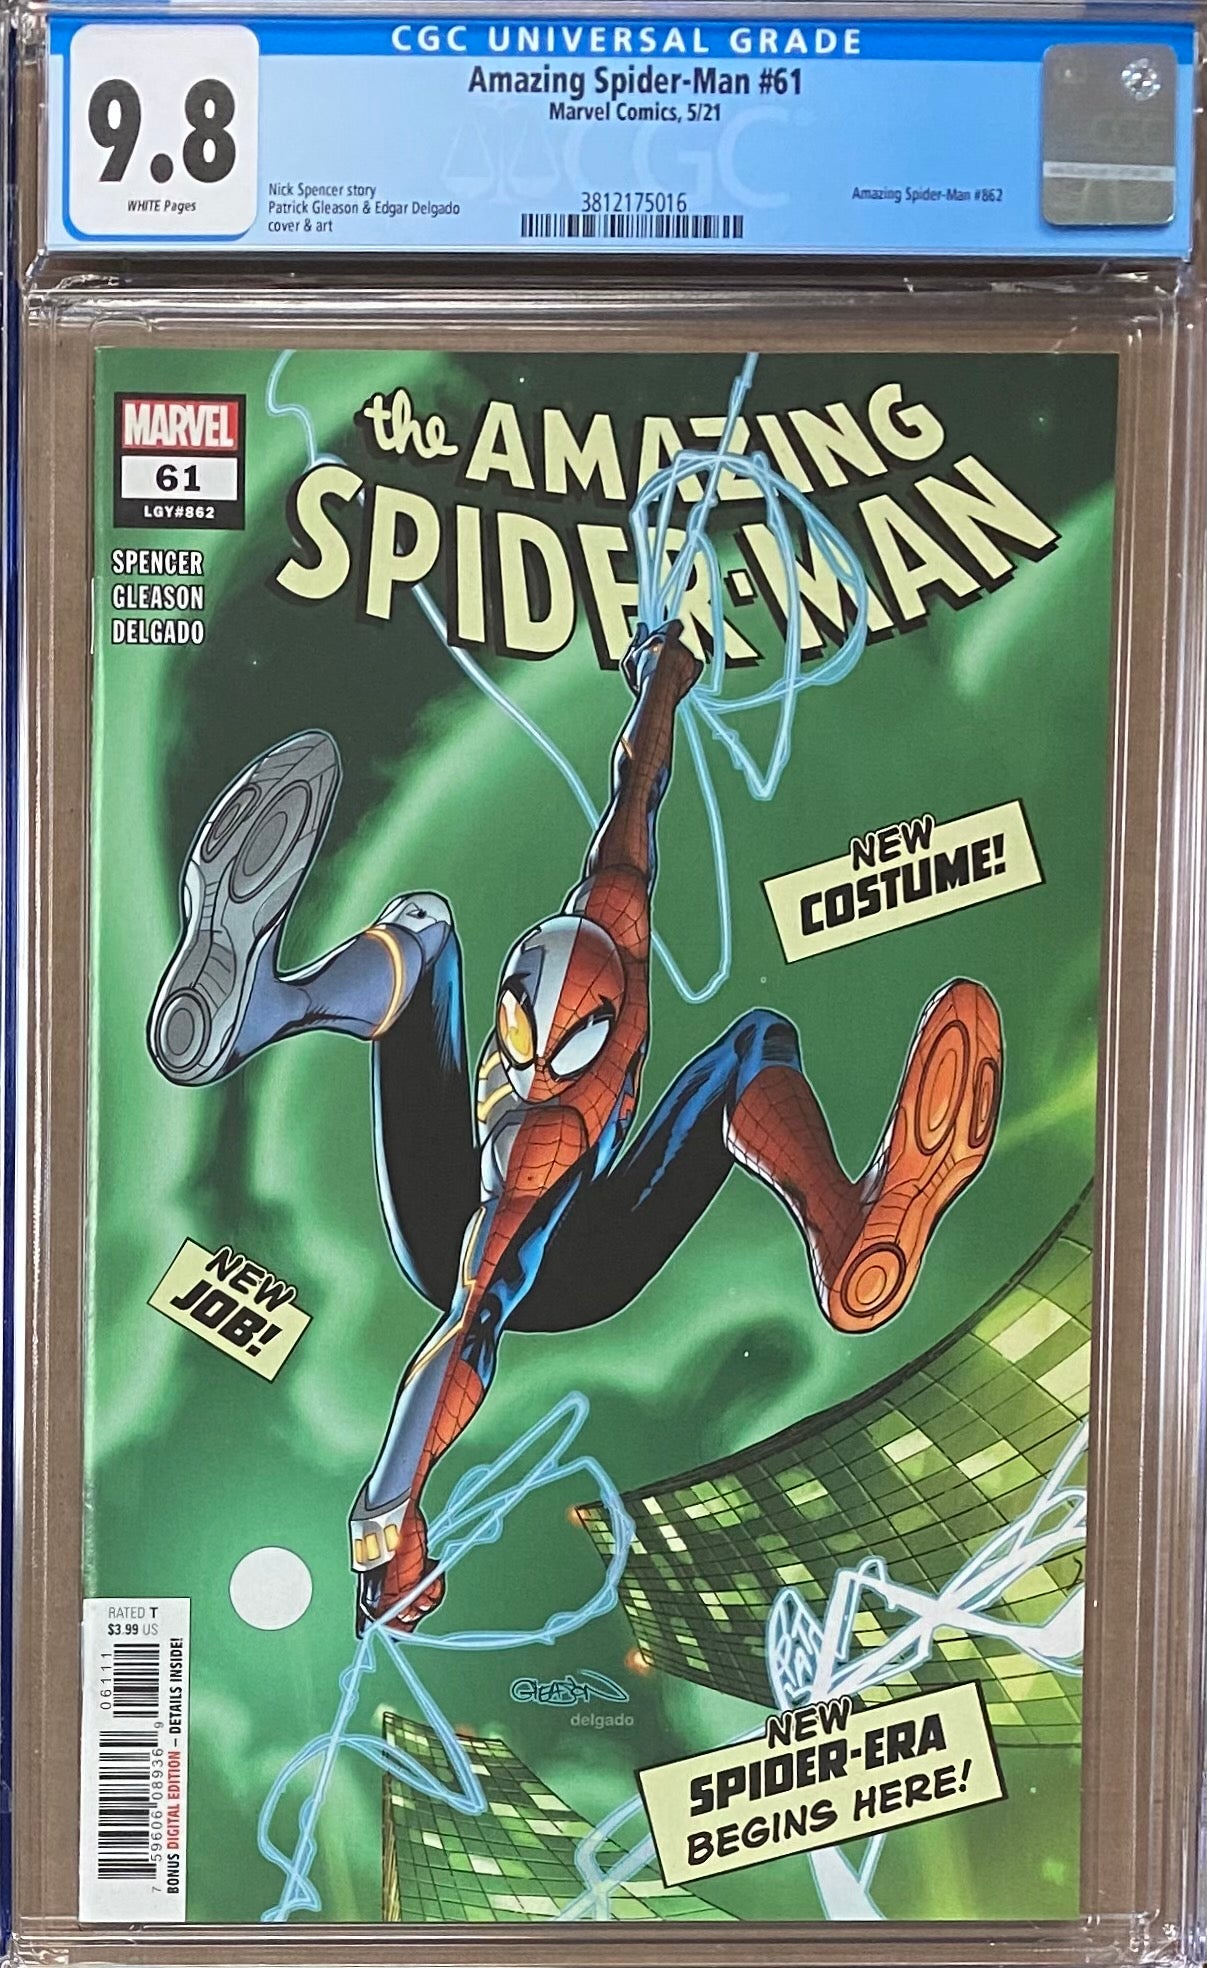 Amazing Spider-Man #61 CGC 9.8 - New Costume!